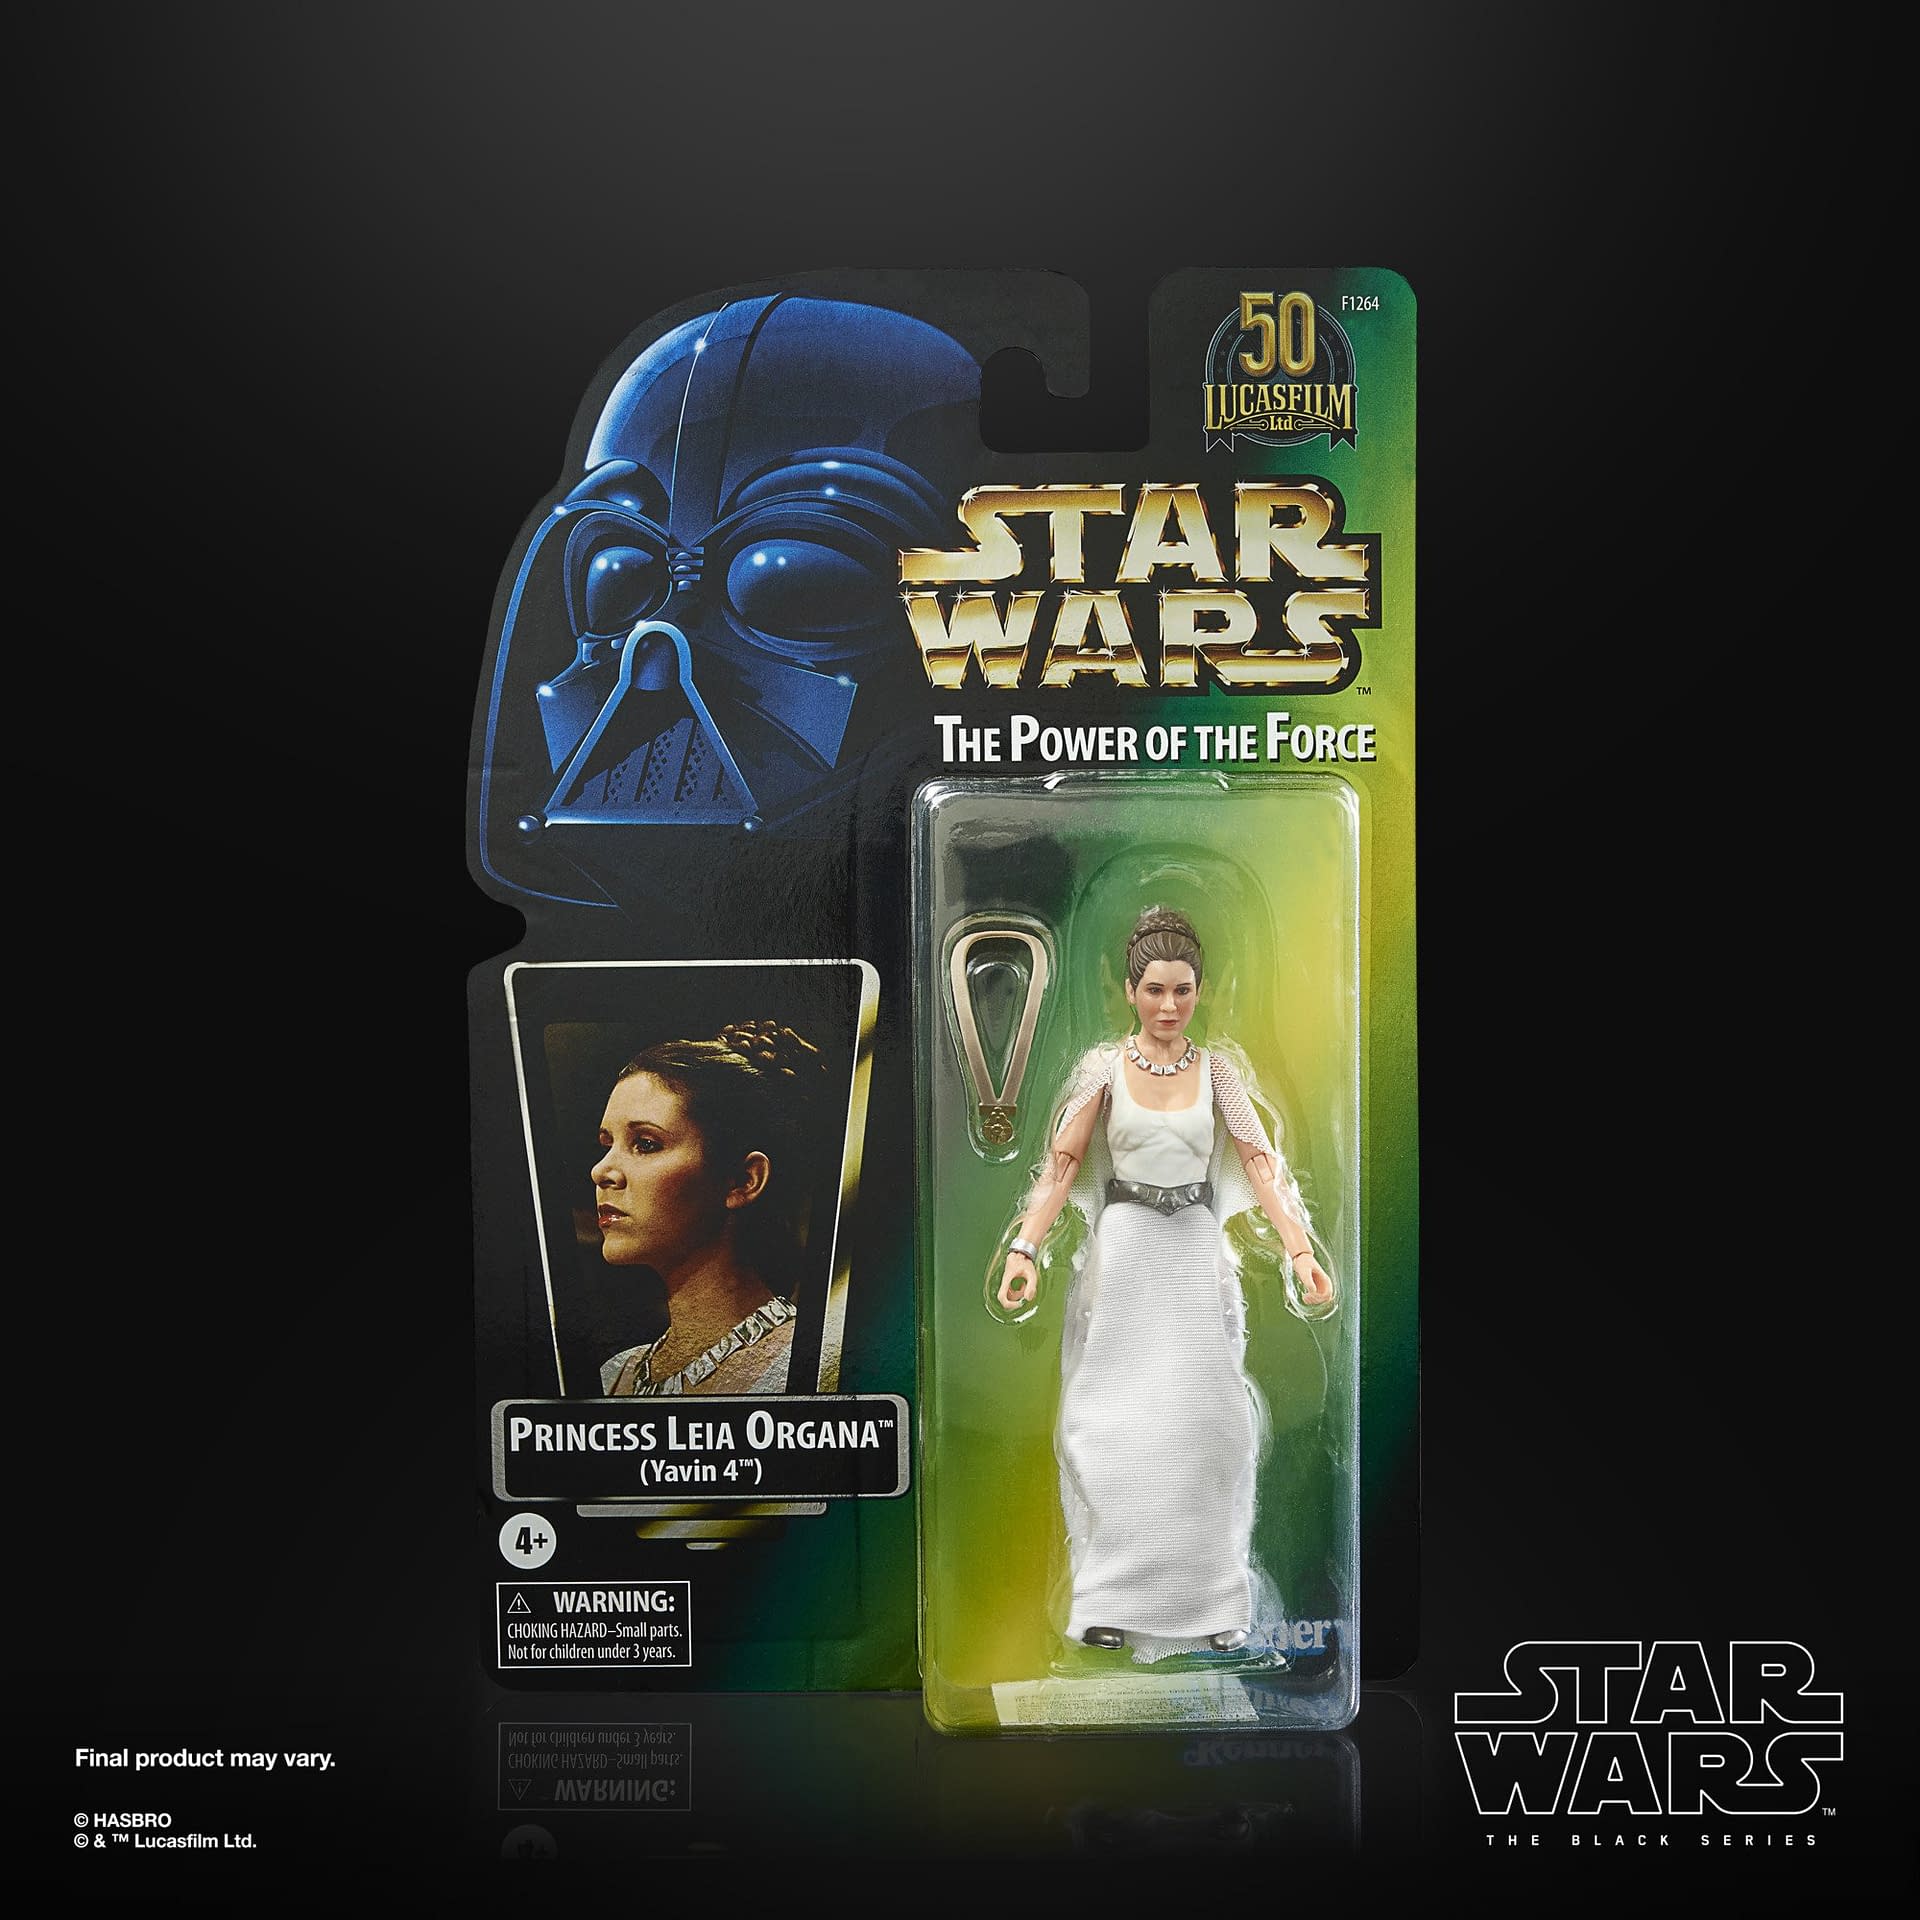 Star Wars POTF Princess Leia Collection Leia Organa and Han Solo "BRAND NEW"